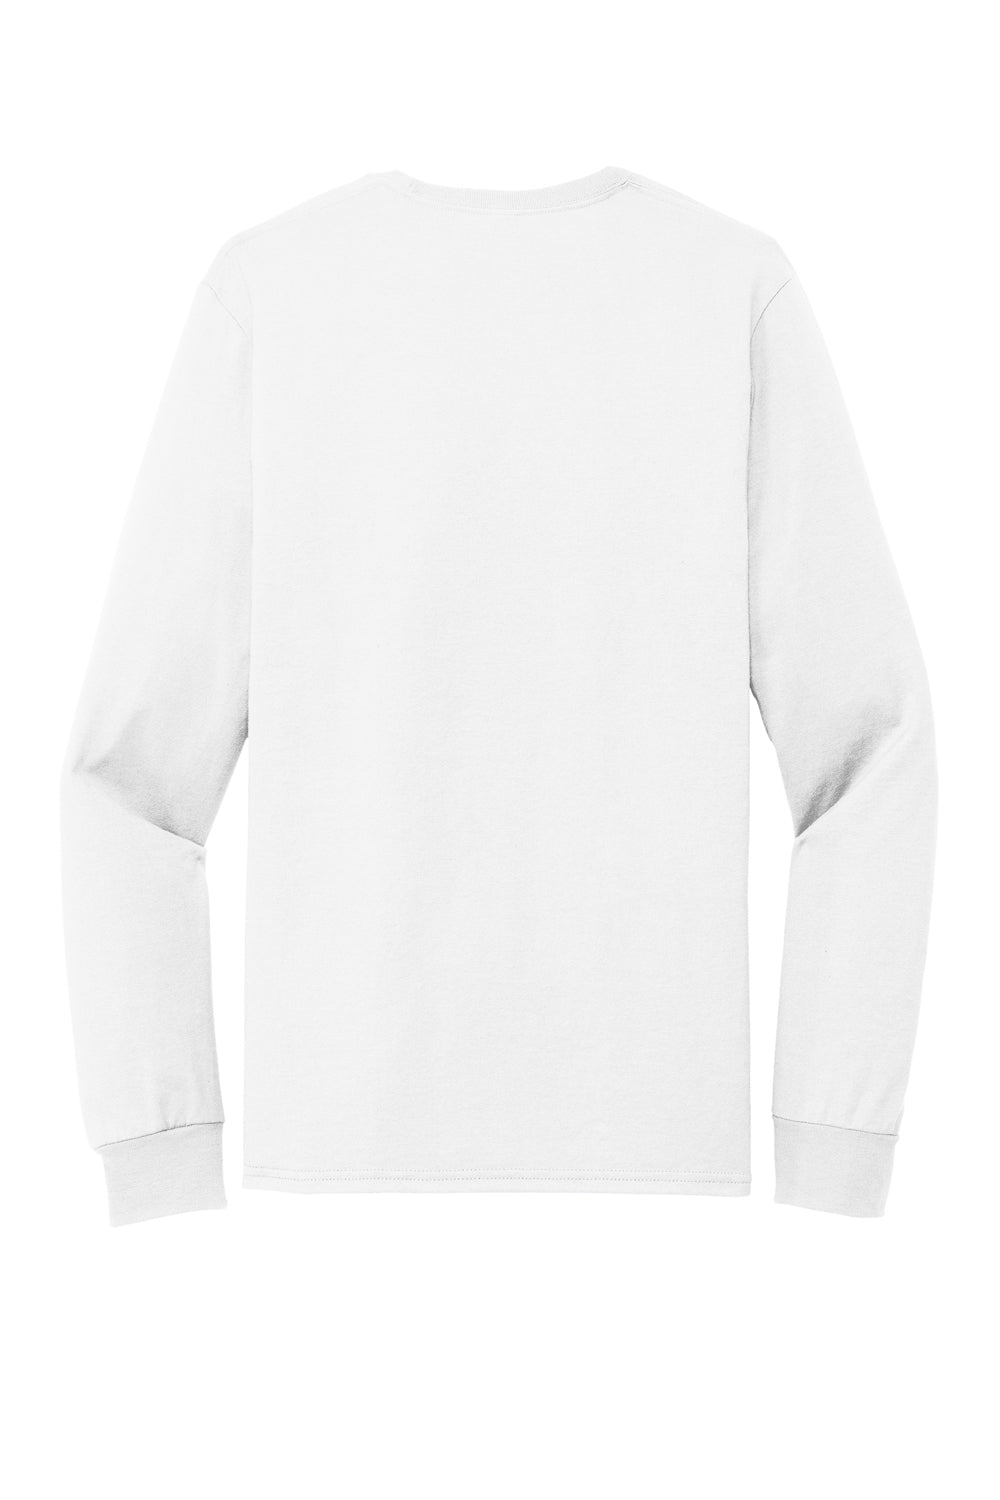 Jerzees 560LS Mens Premium Blend Ring Spun Long Sleeve Crewneck T-Shirt White Flat Back